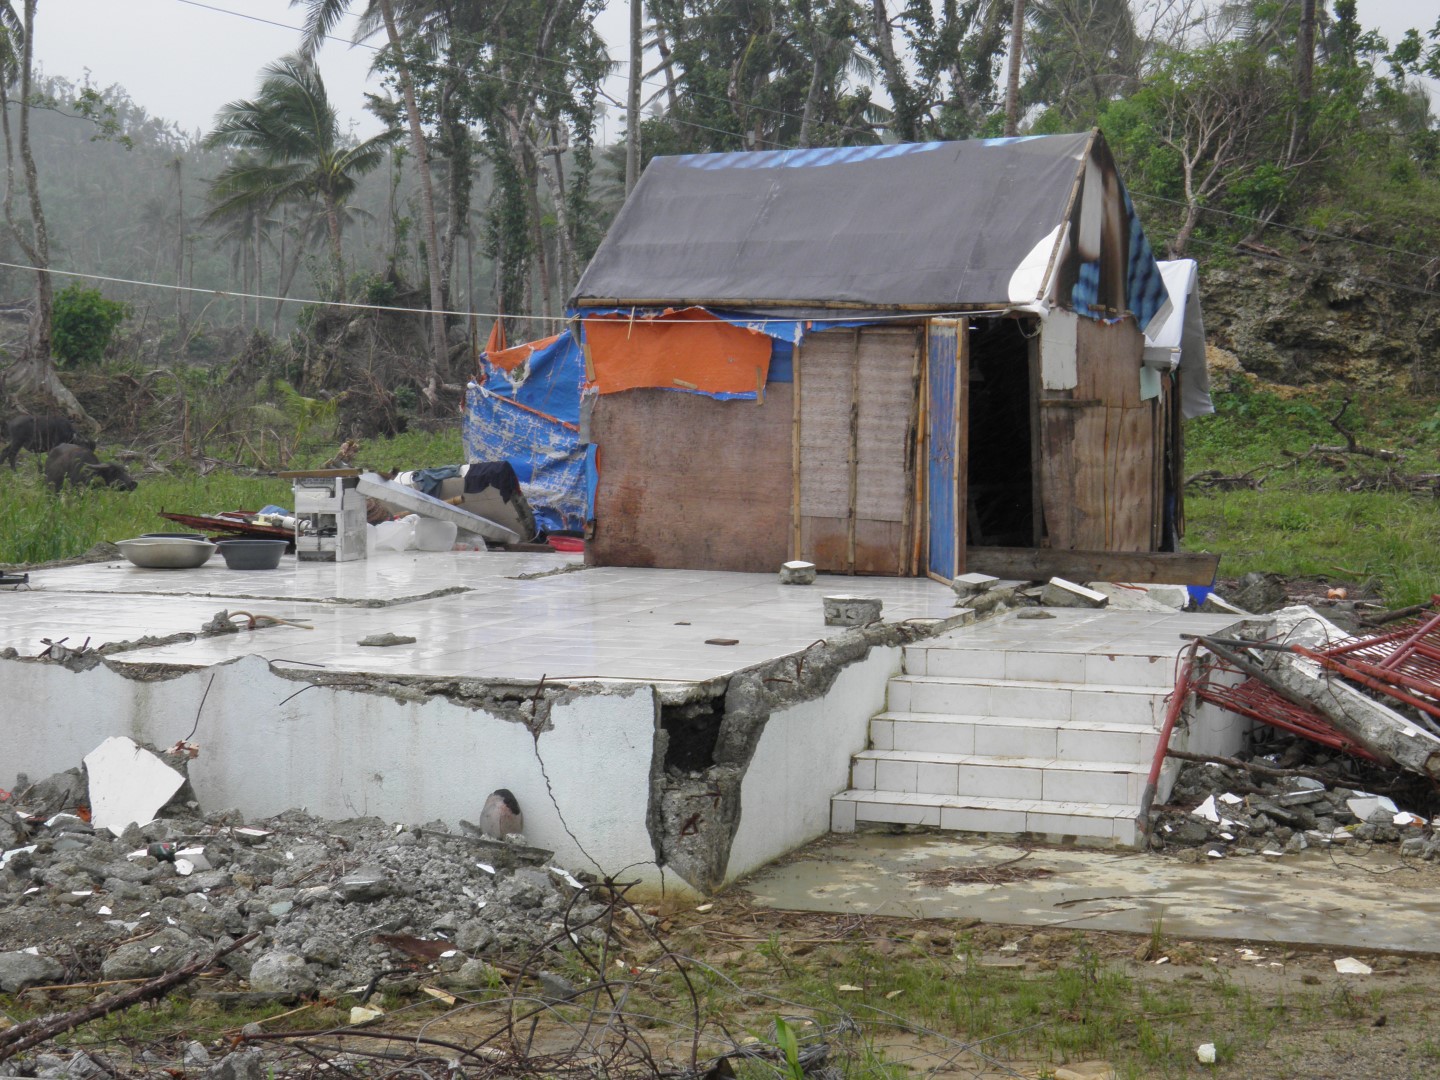 6-Hernani-New-shed-on-foundation-of-storm-surge-destroyed-home.jpg